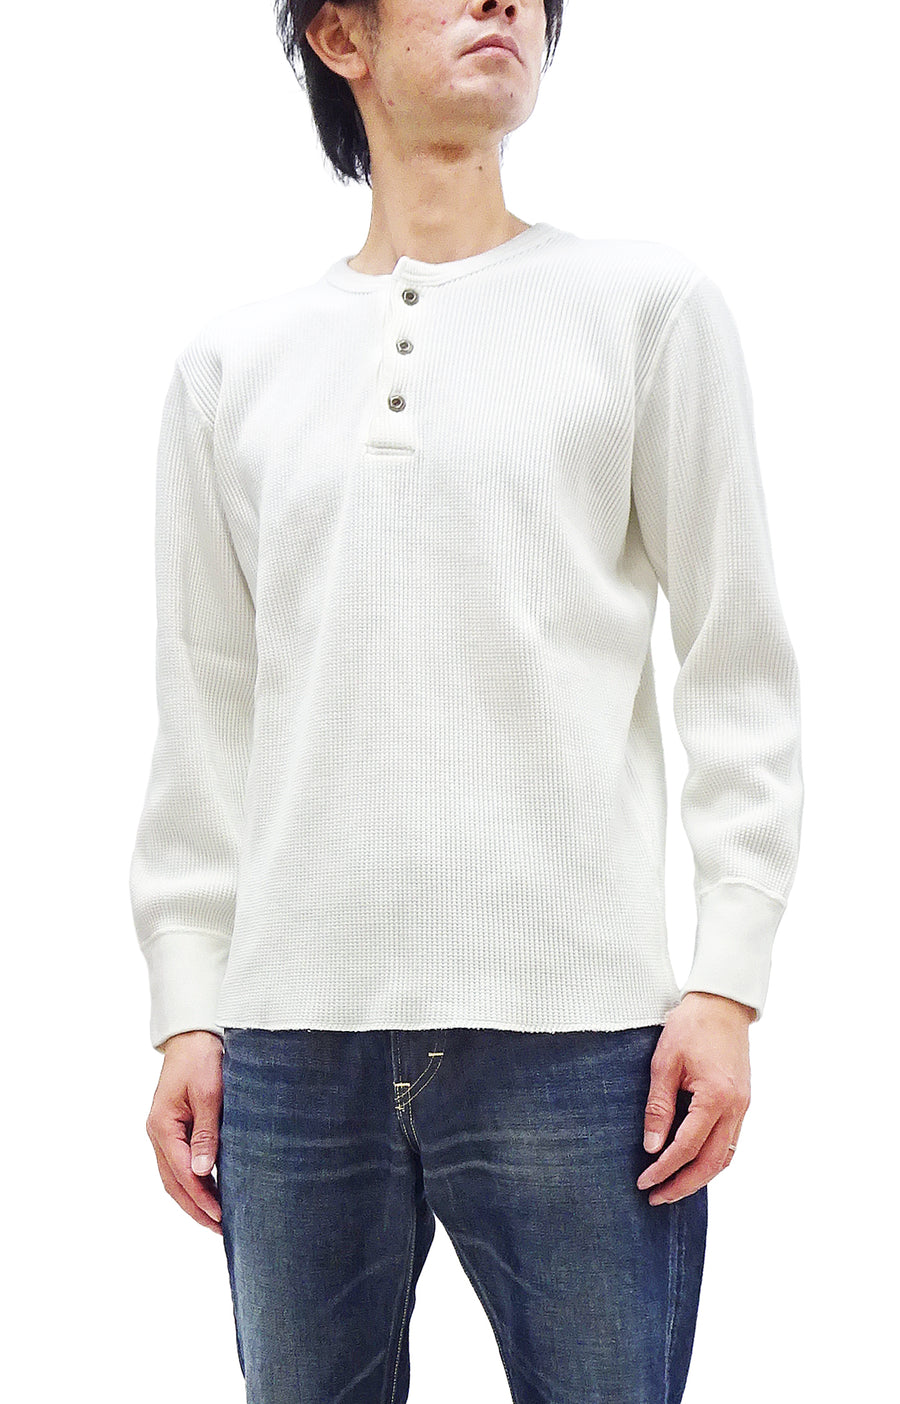 Long Sleeve Shirt 3/button crew neck. White